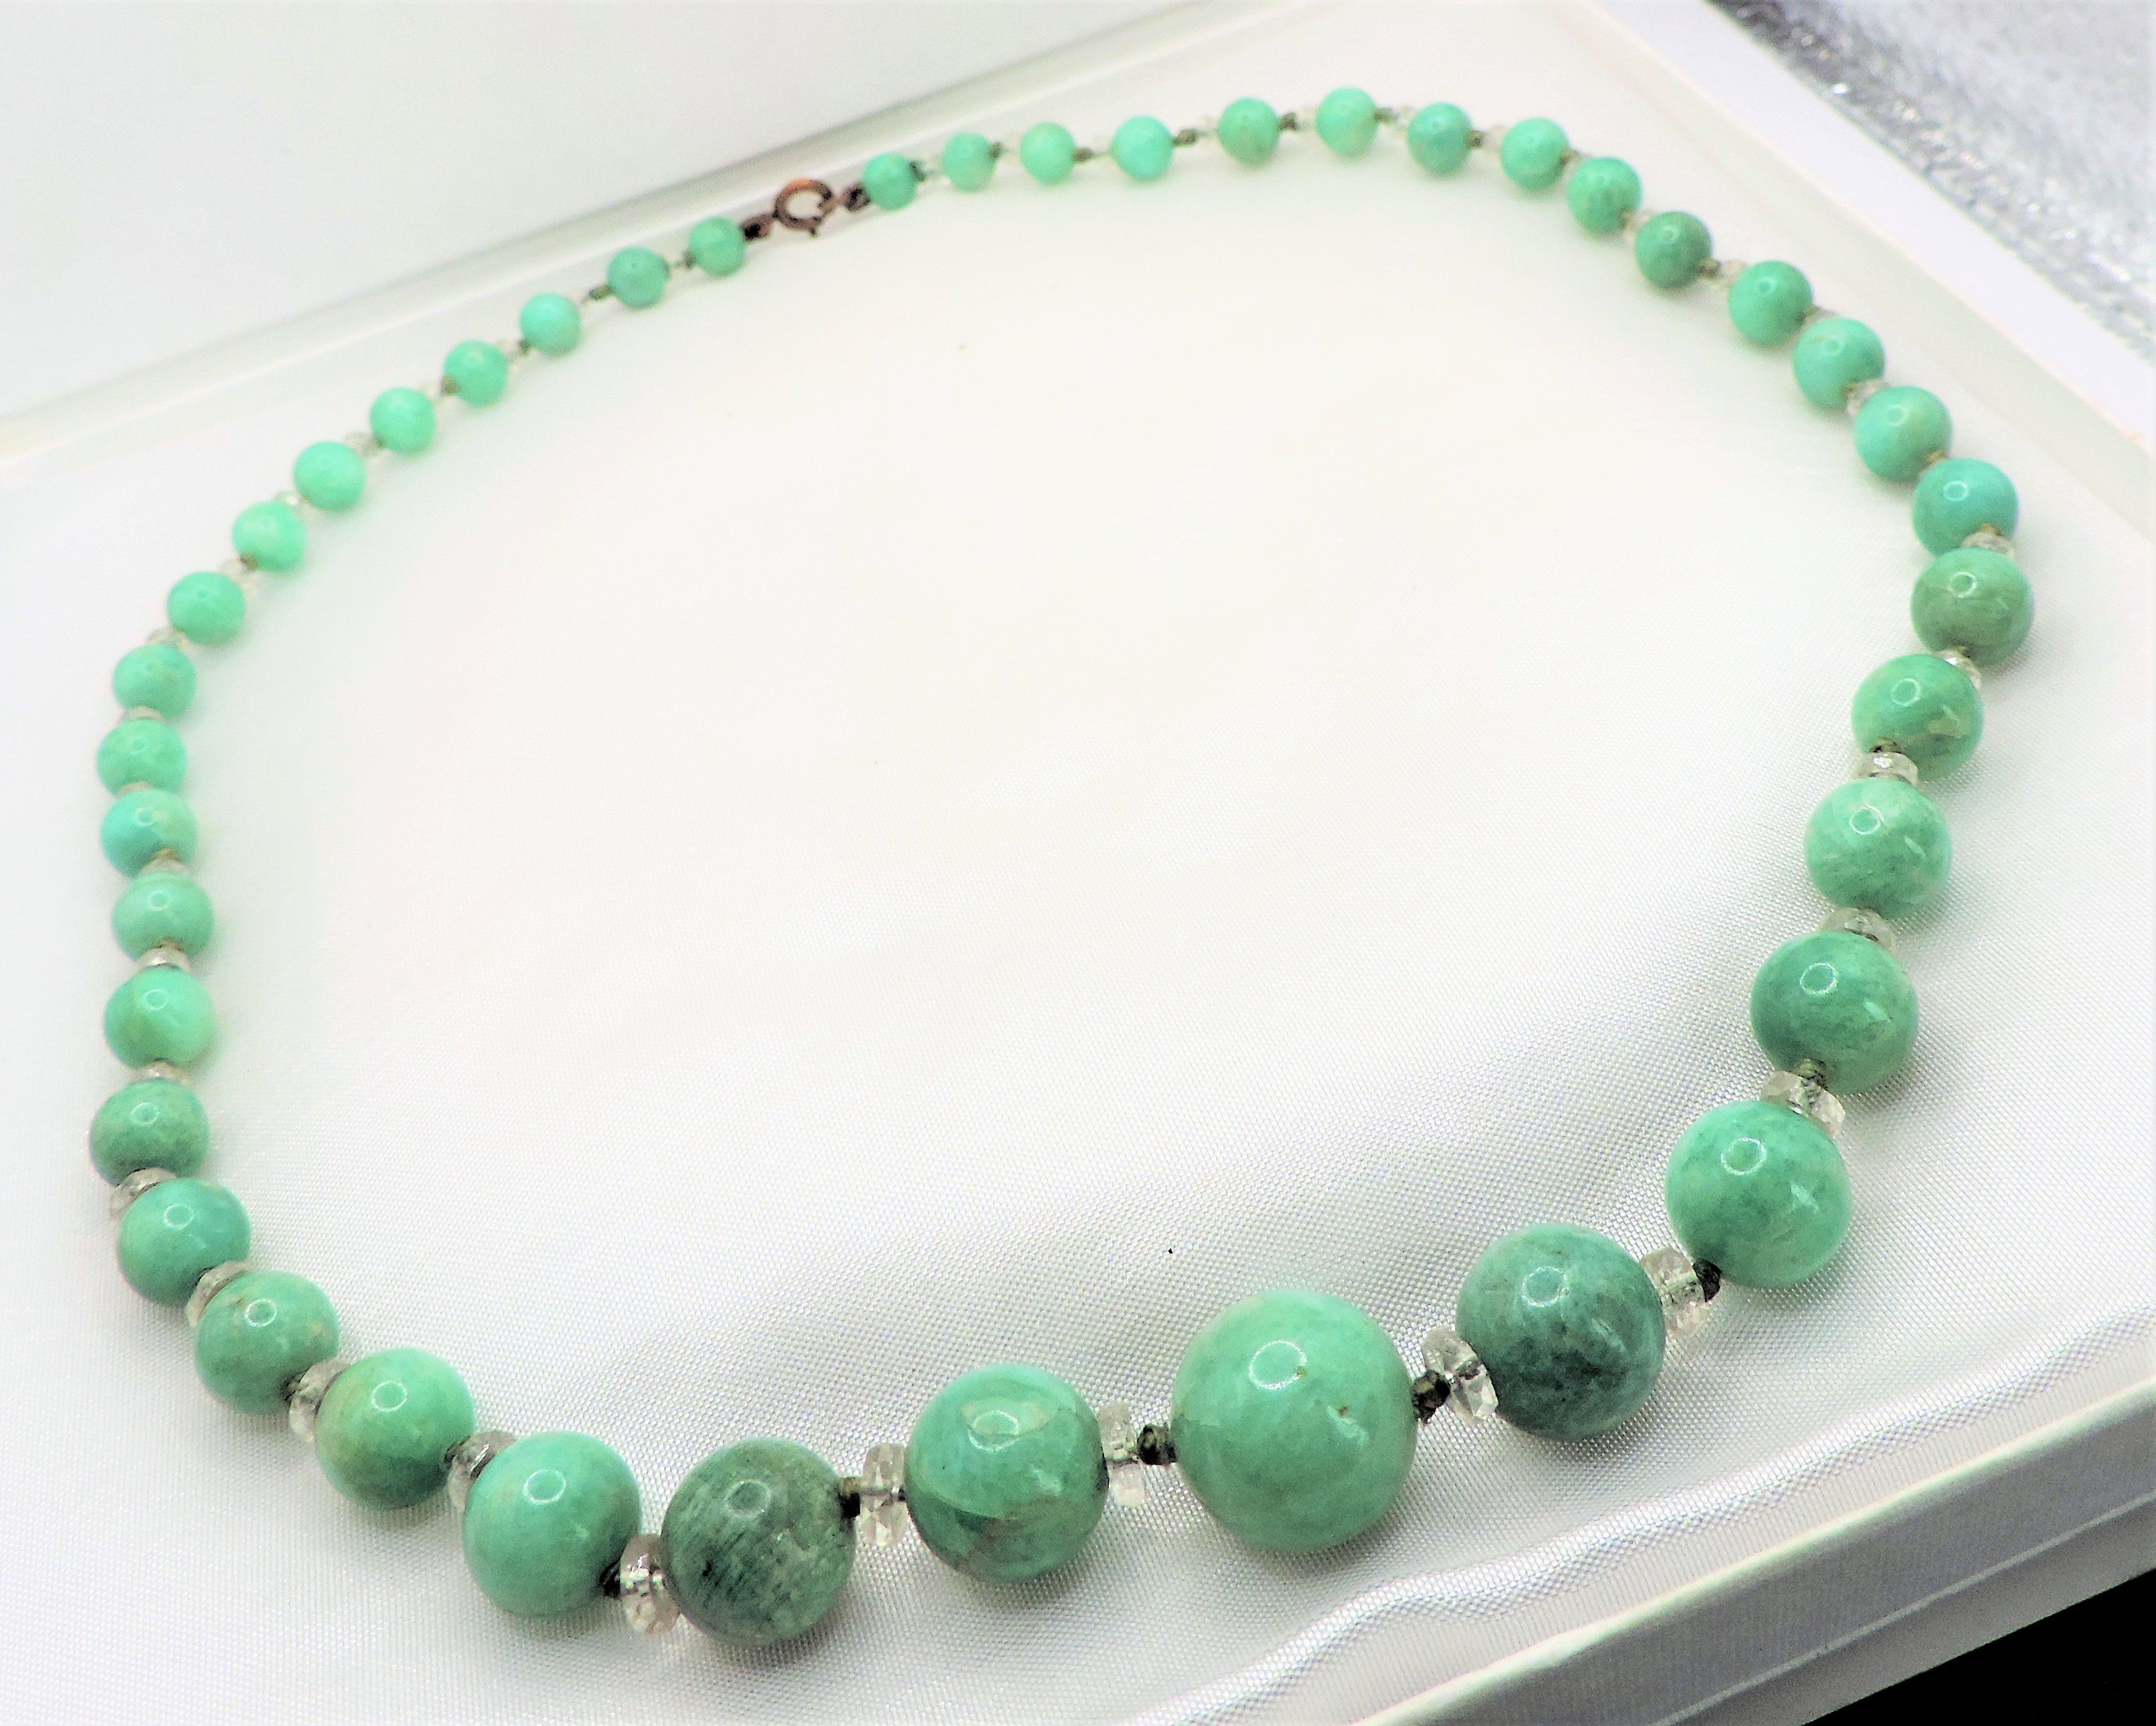 Antique Graduated Amazonite Beads Gemstone Necklace c.1920's Art Deco - Image 6 of 6